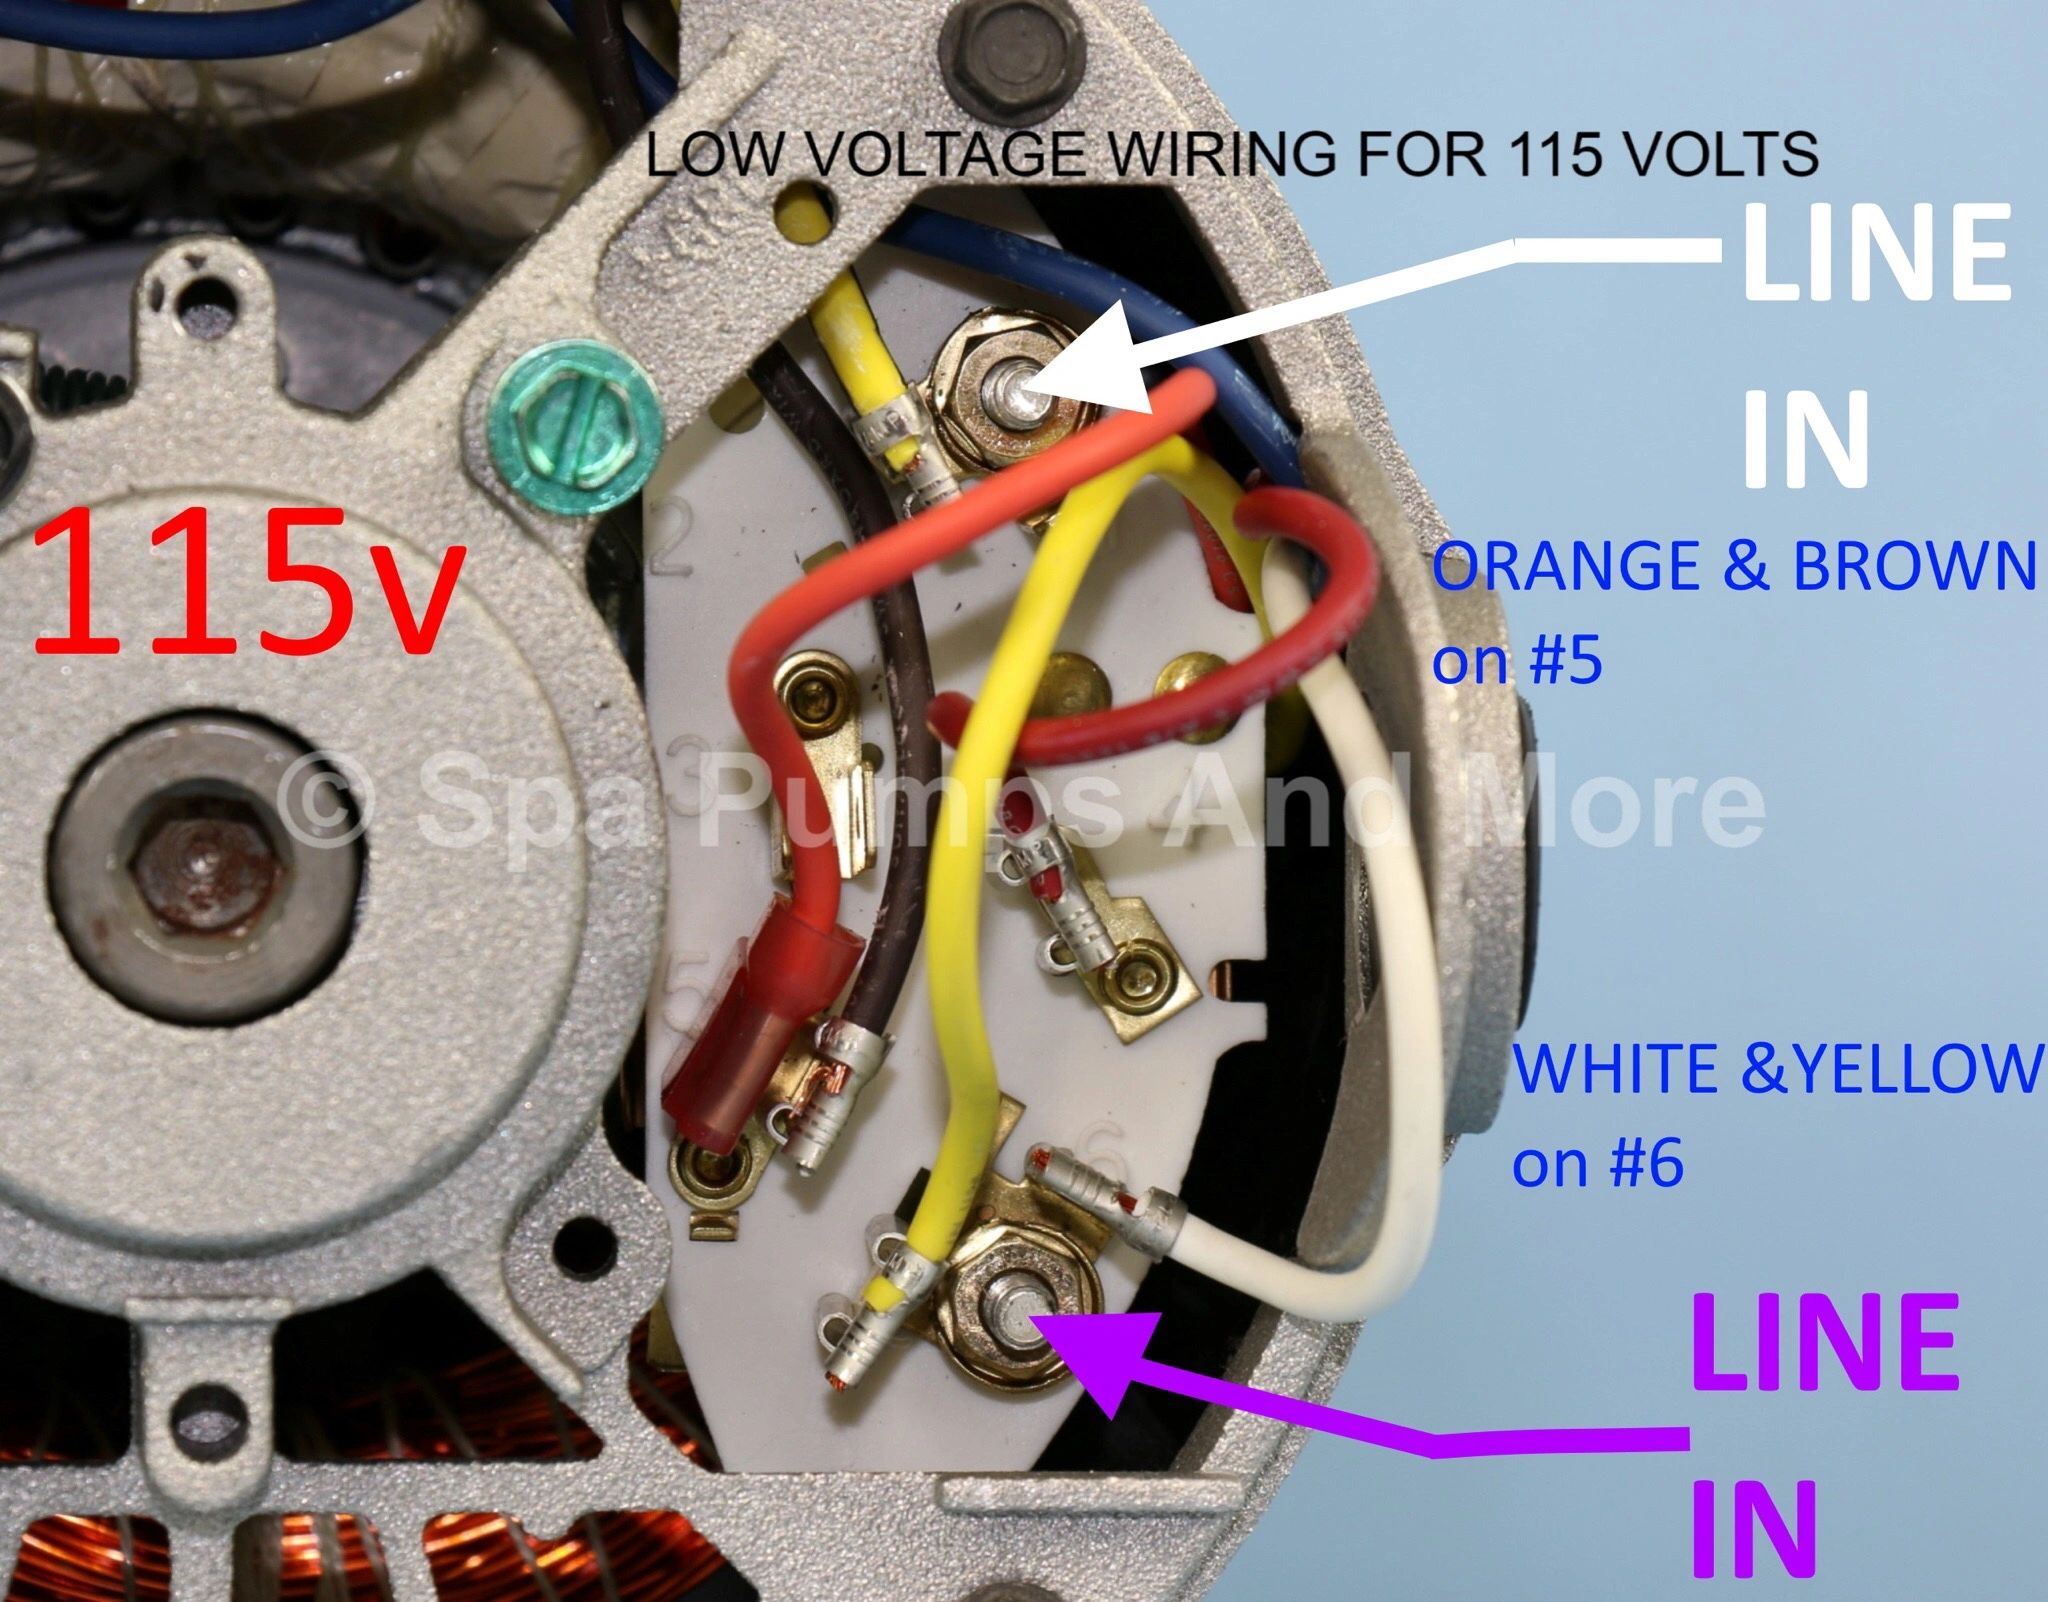 Hot tub motor wiring diagram